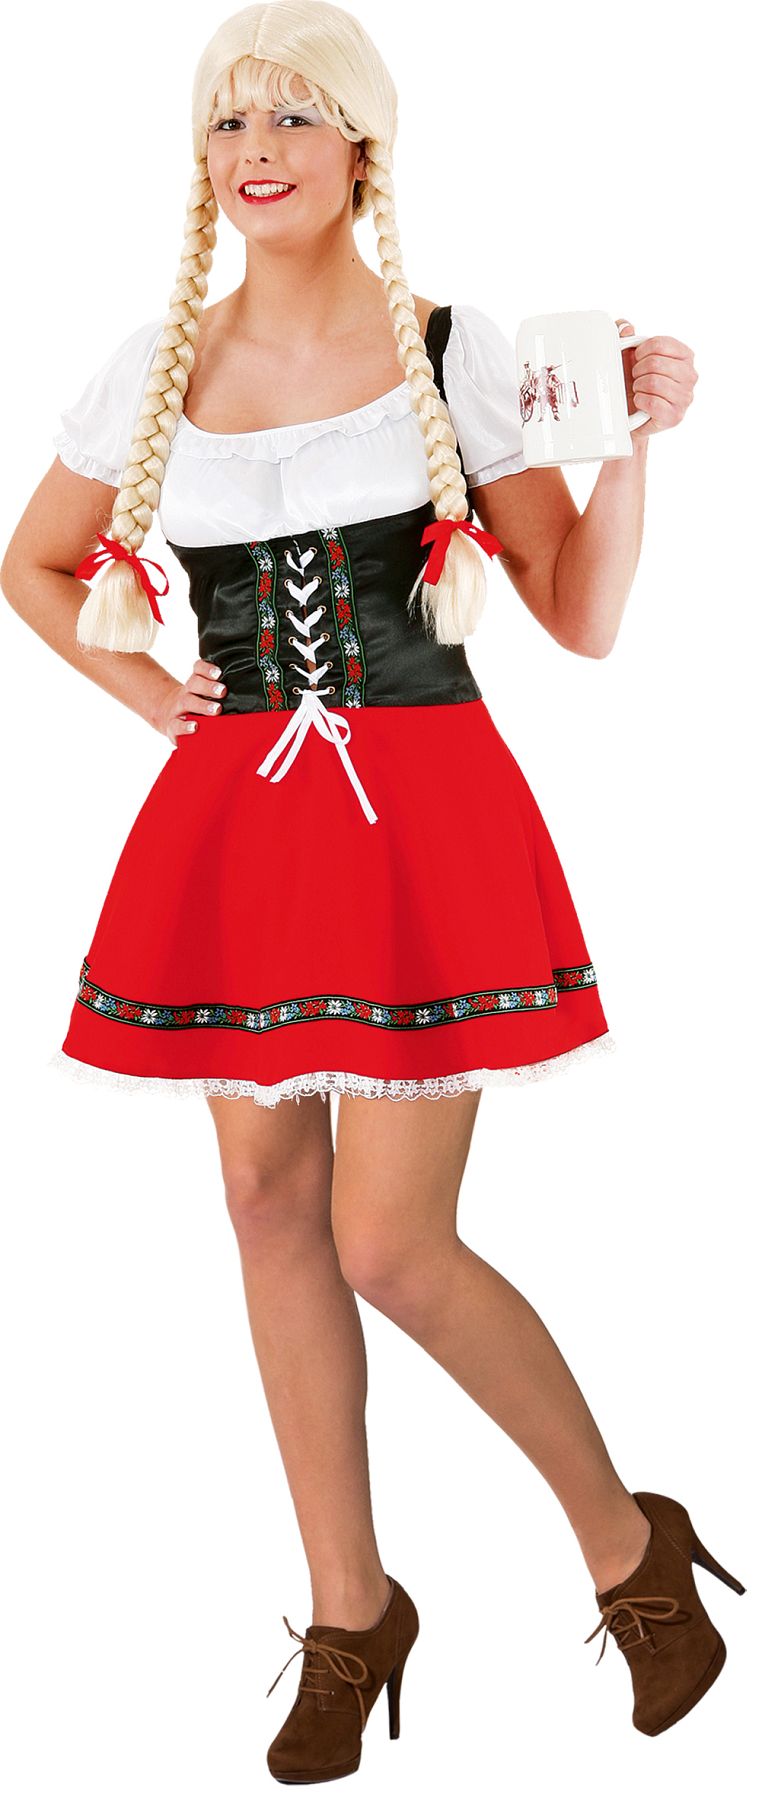 Costume bavaroise sexy ''Dirndl'', rouge/noir